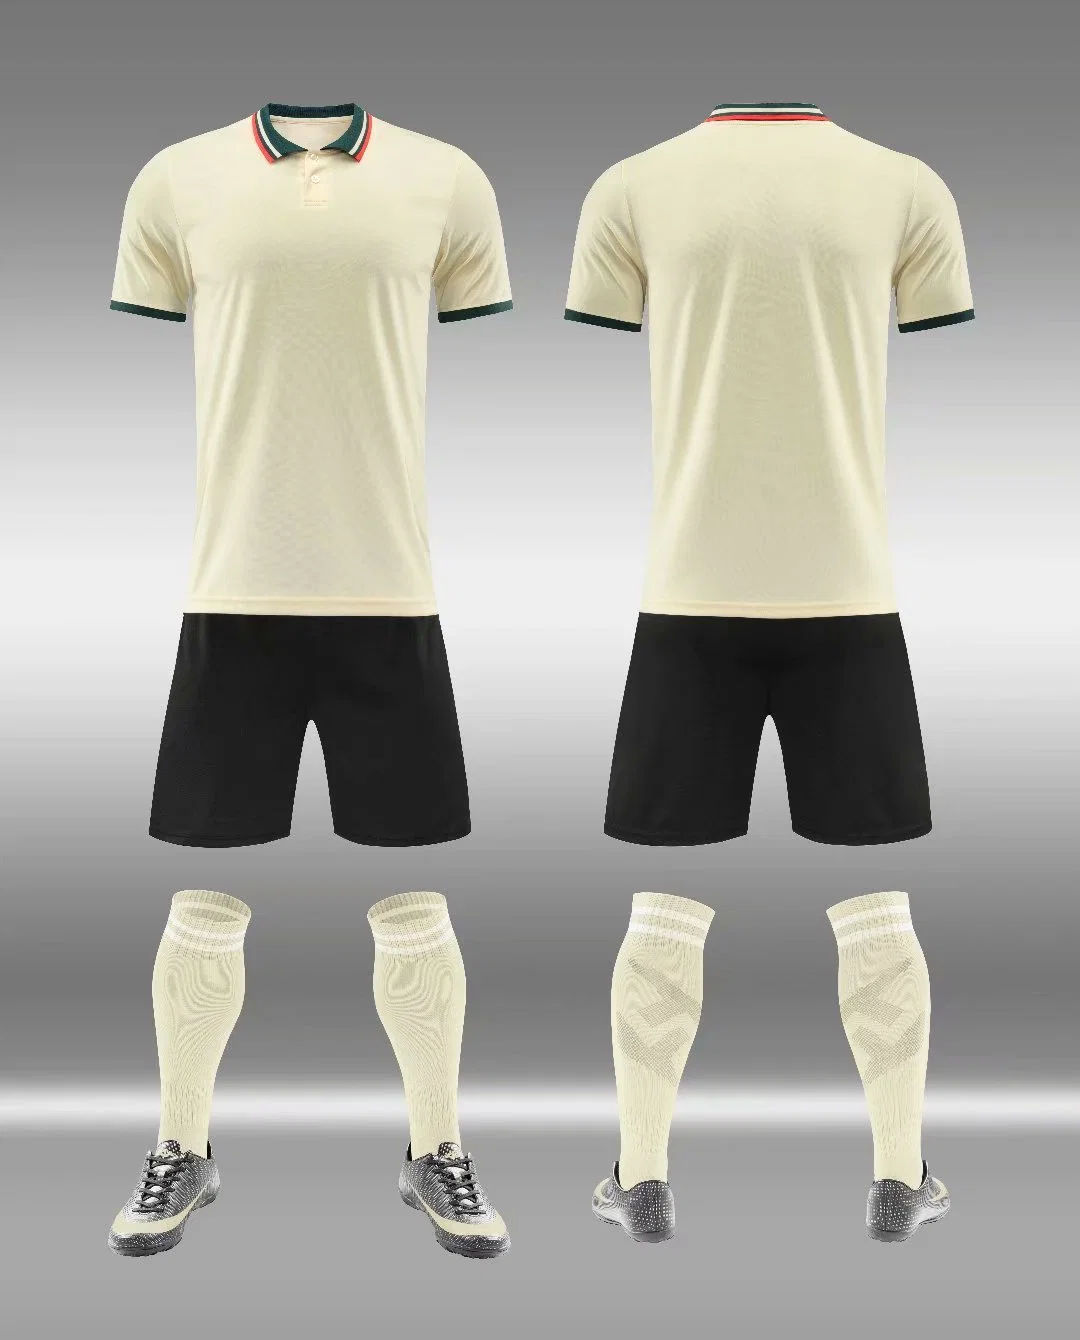 New Design Youth Sports Wear Soccer Uniform Men Soccer Jersey Set Kids Football Jersey Wholesale Tracksuit Clothing